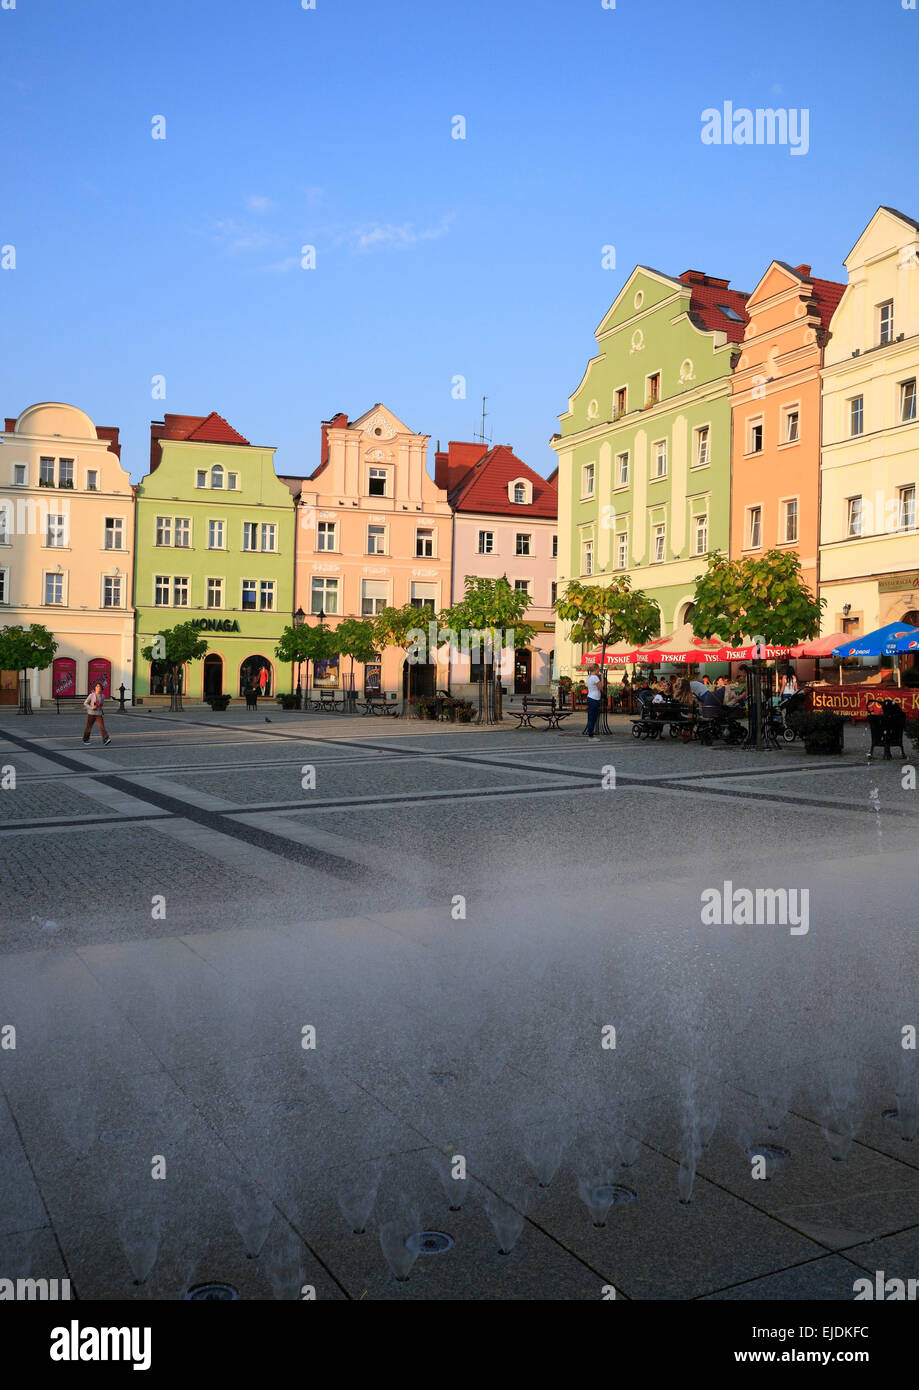 Houses at market square, Boleslawiec (Bunzlau), Lower Silesia, Poland, Europe Stock Photo